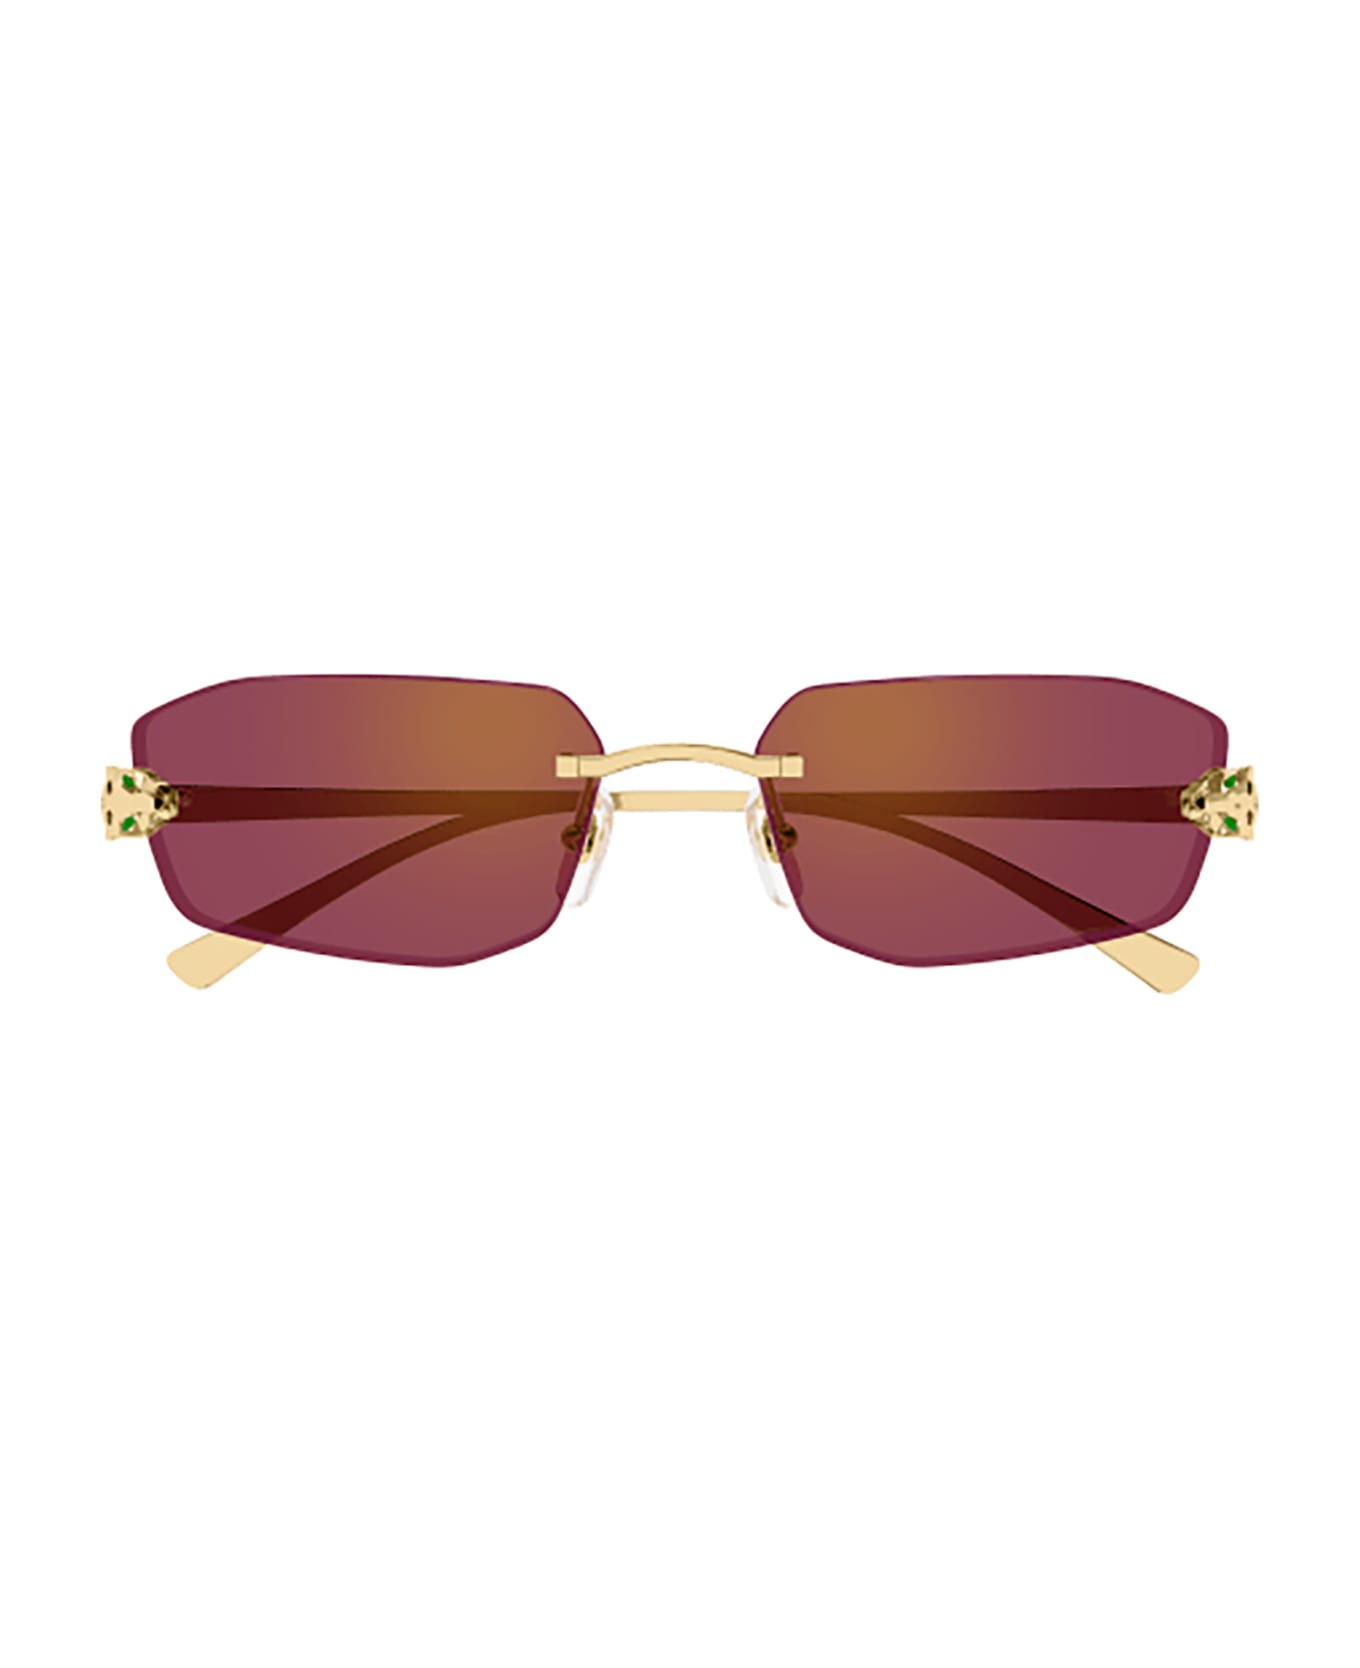 Cartier Eyewear Ct0474s Sunglasses - 002 GOLD GOLD RED